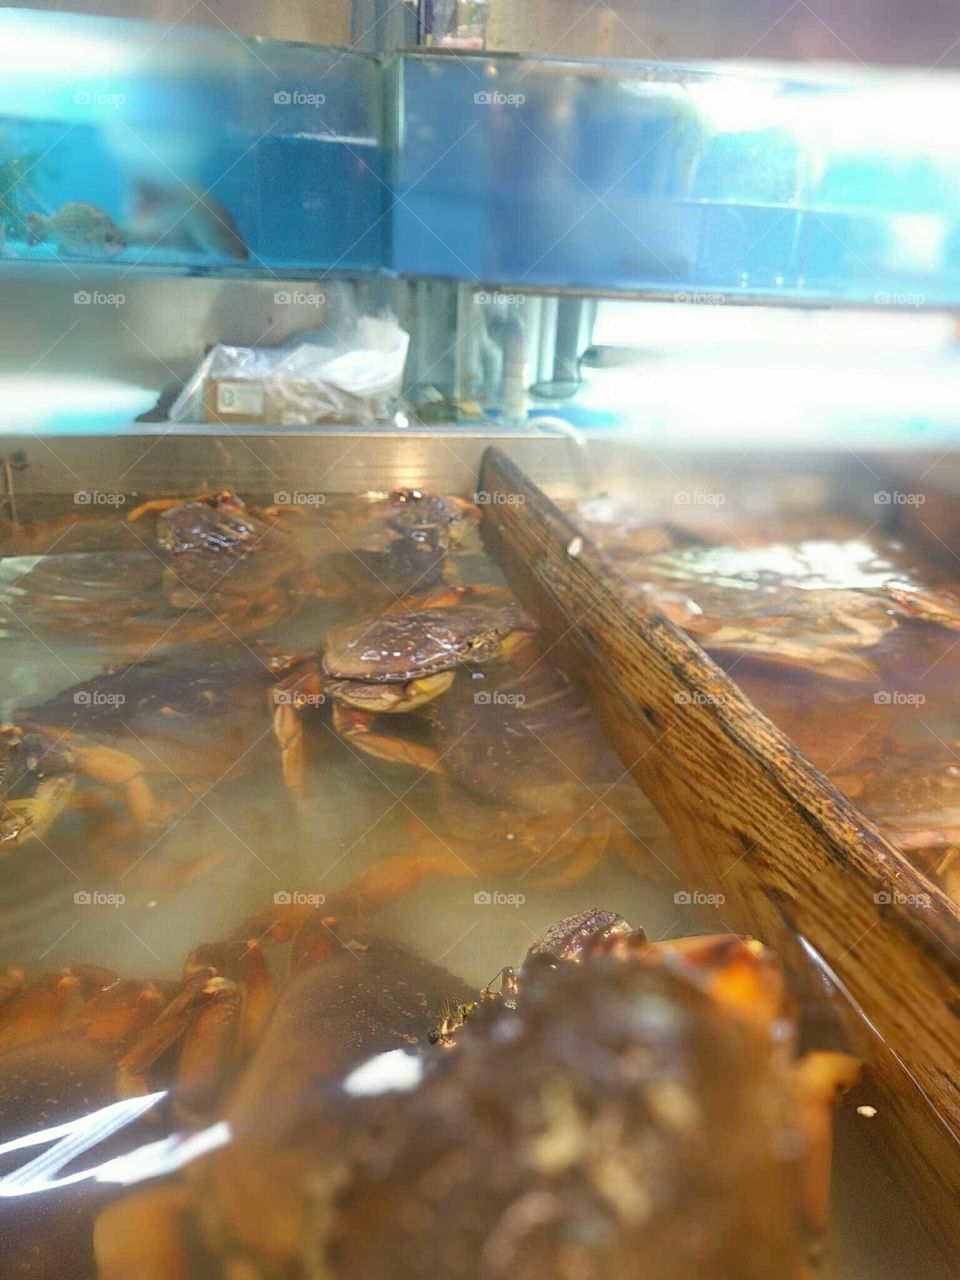 Crabs awaiting dinner time.